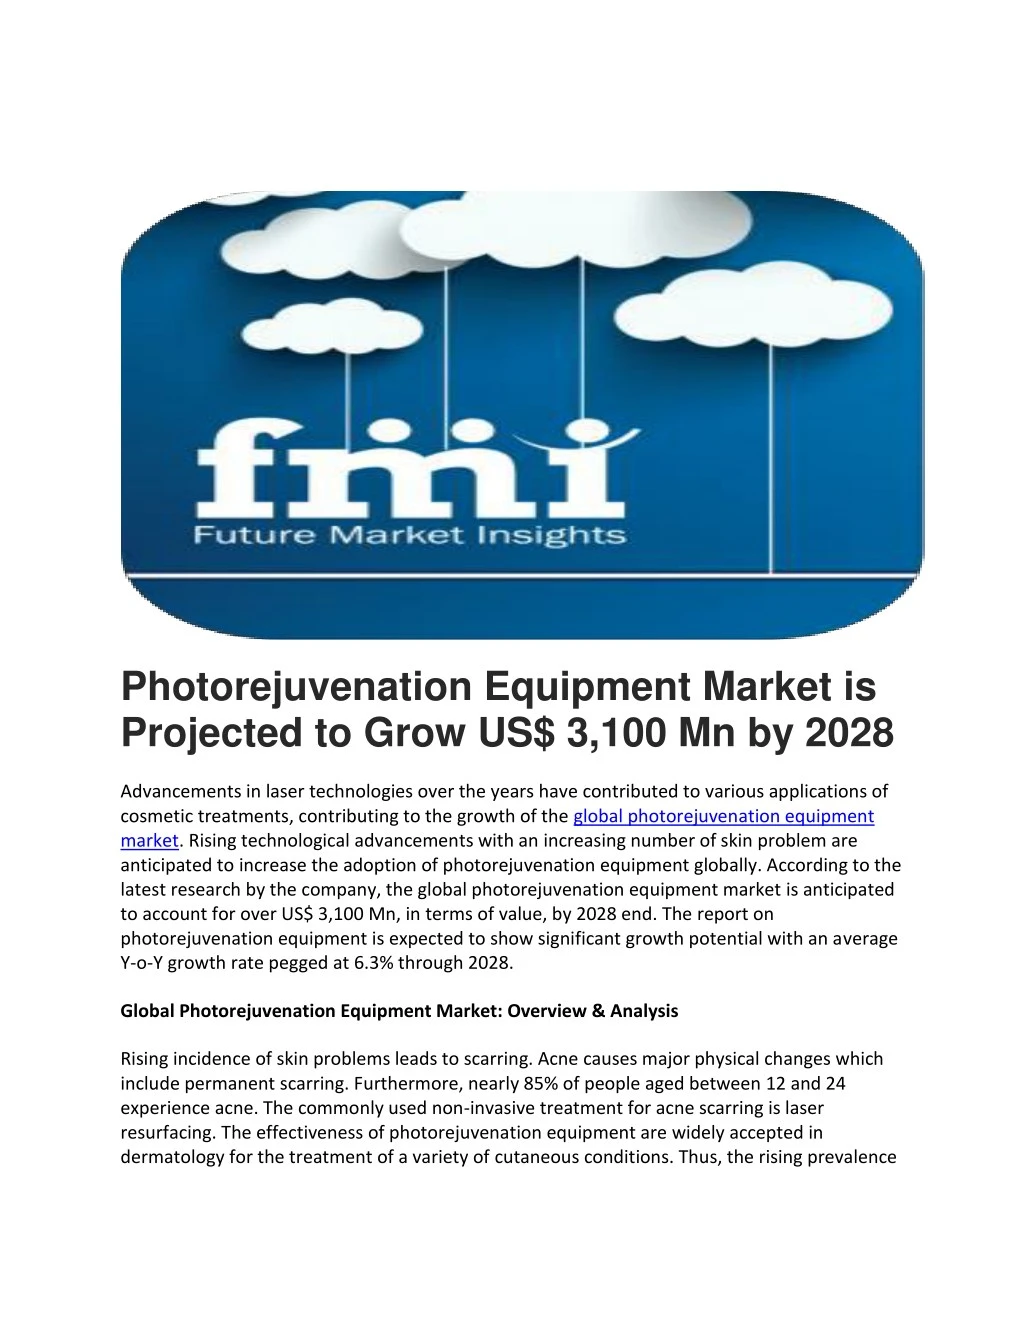 photorejuvenation equipment market is projected